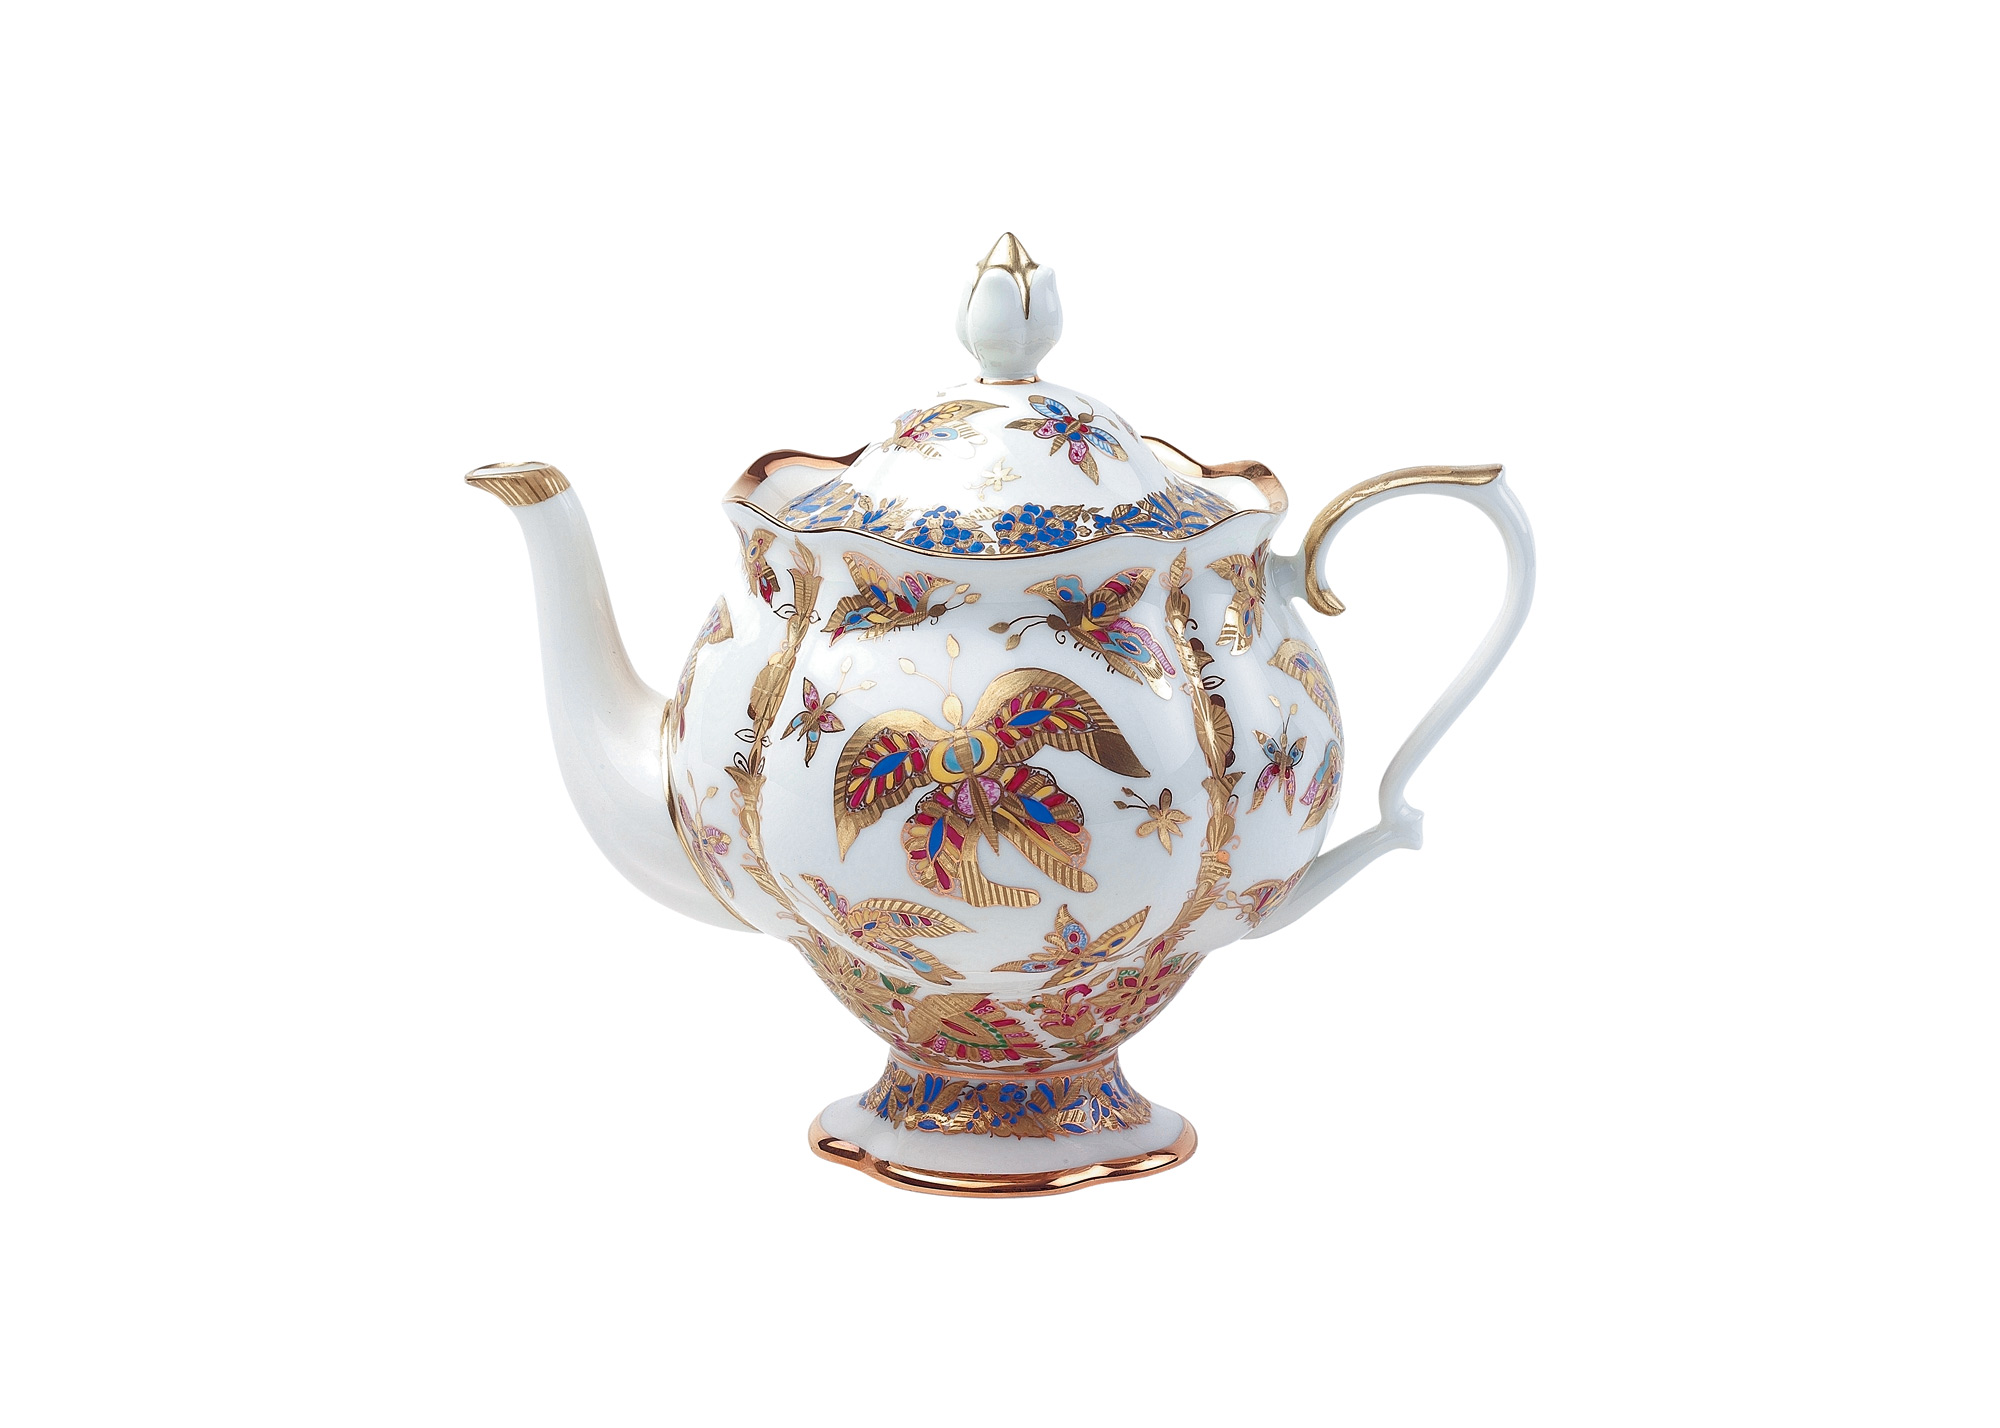 Buy Fantastic Butterflies Teapot at GoldenCockerel.com